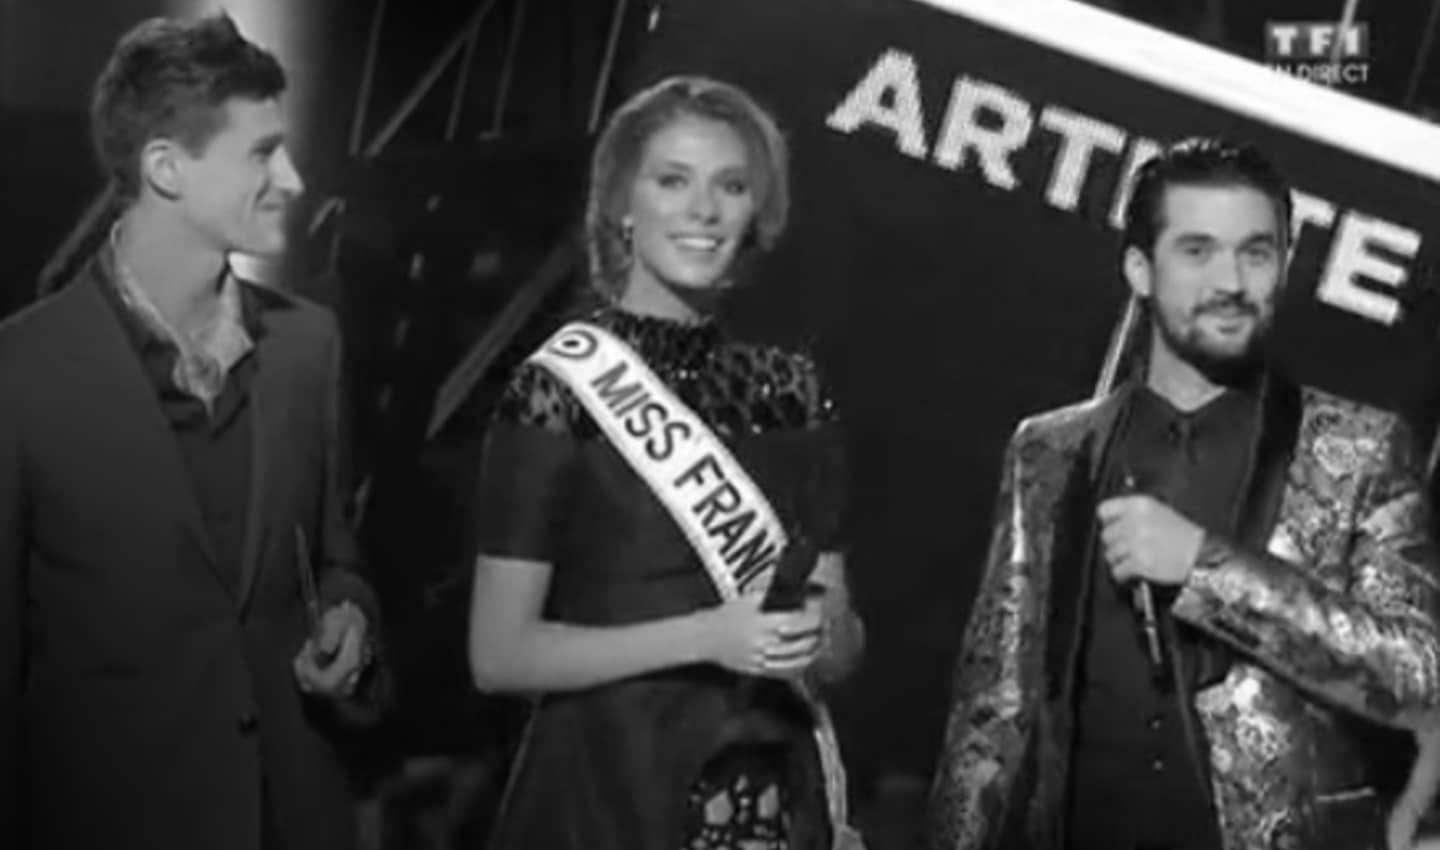 Miss-France-2015-Camille-Cerf-NRJ-Dress-ON-AURA-TOUT-VU-COUTURE